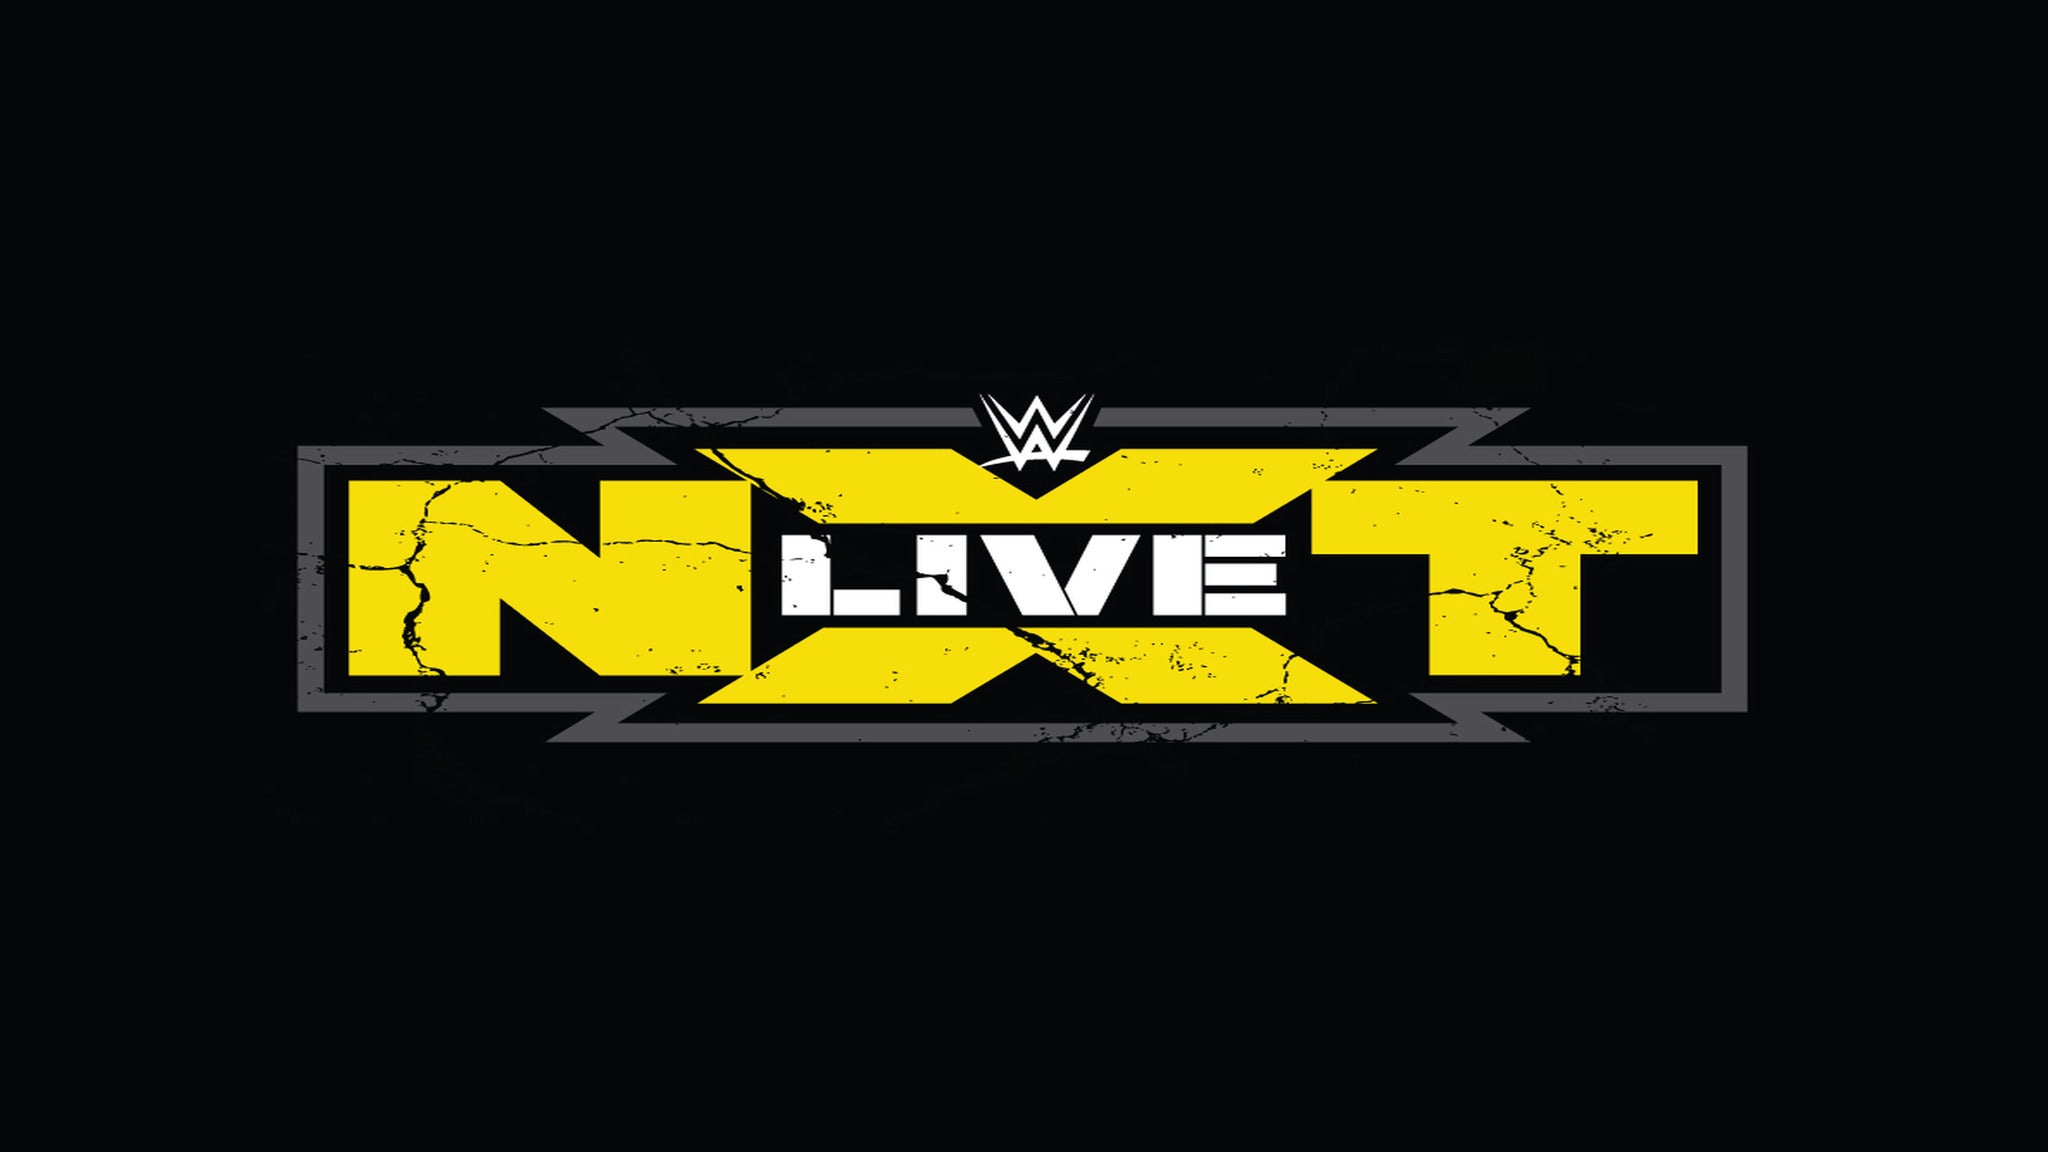 NXT Live in Bethlehem promo photo for Venue presale offer code